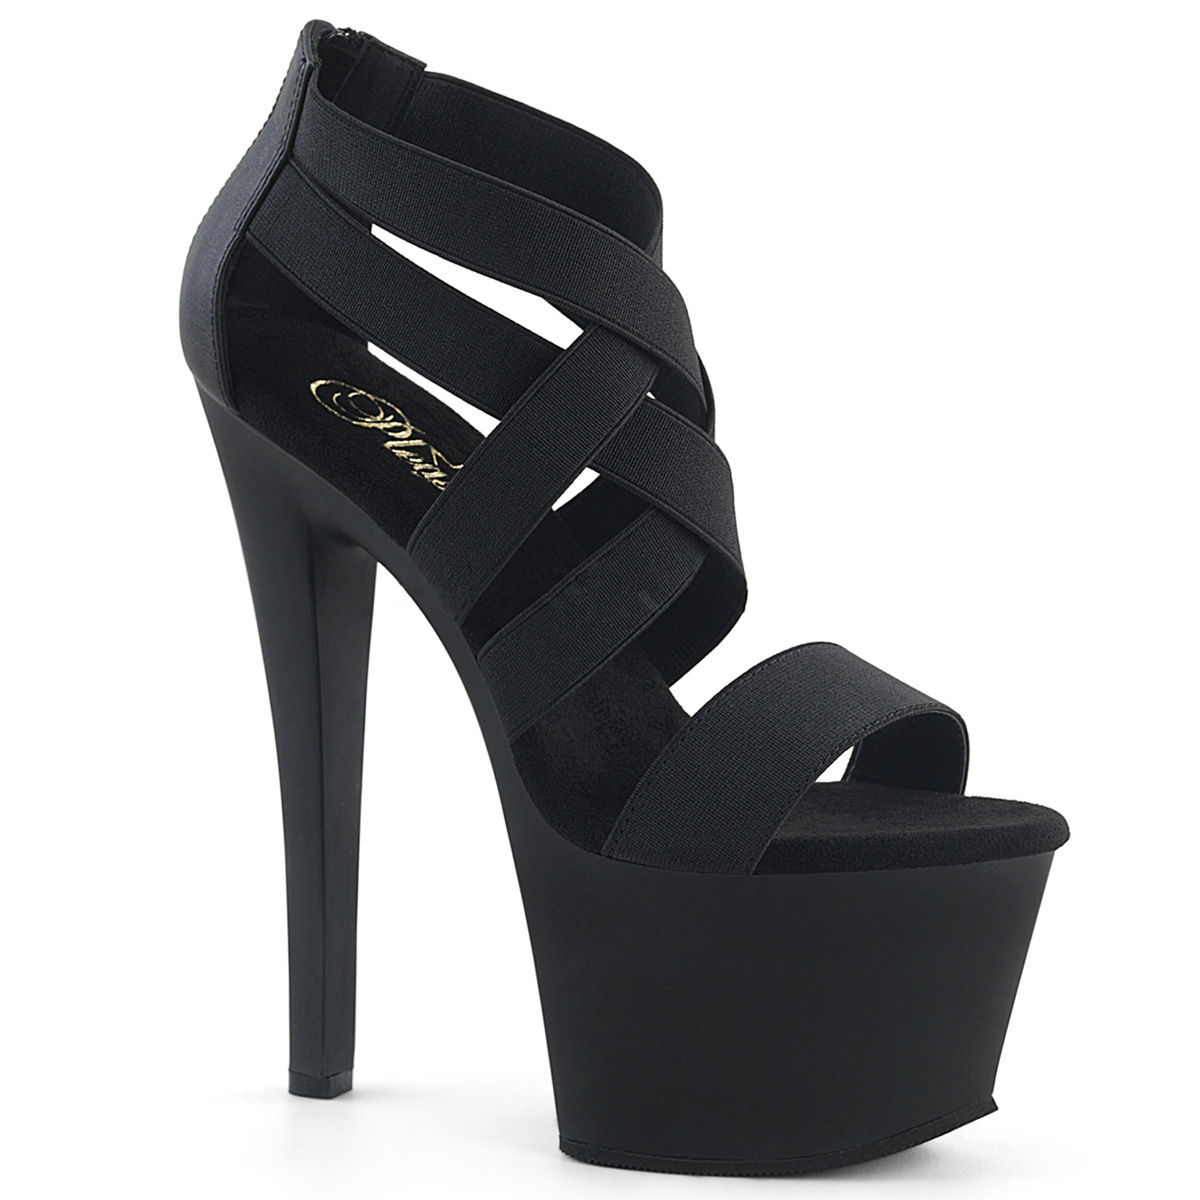 black platform high heels